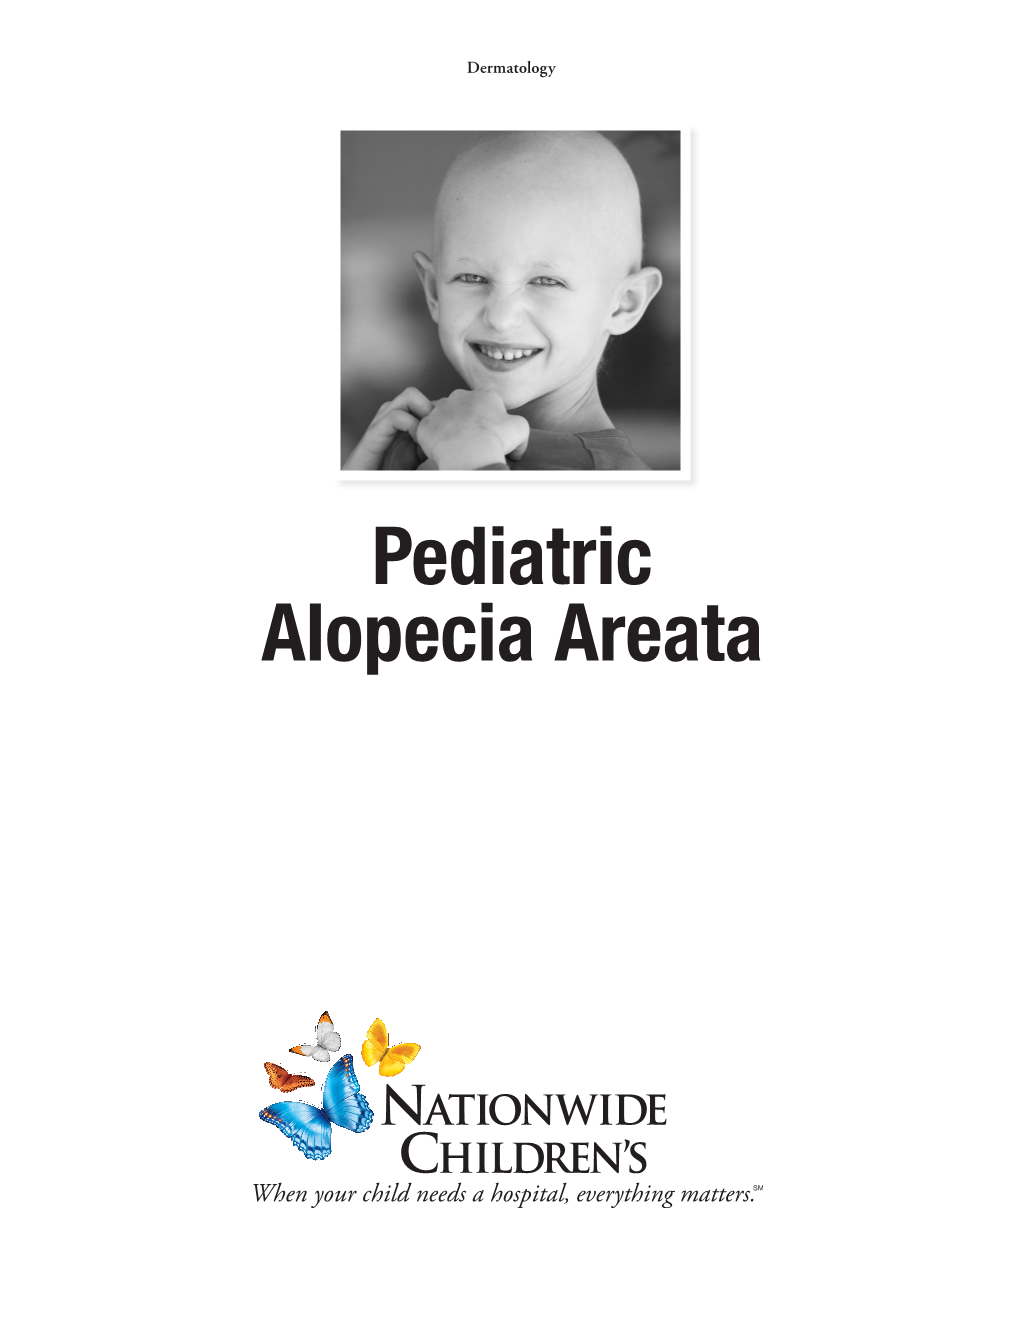 Pediatric Alopecia Areata Alopecia Areata Alopecia Areata Is a Non-Scarring Form of Hair Loss Occurring in Children and Adults